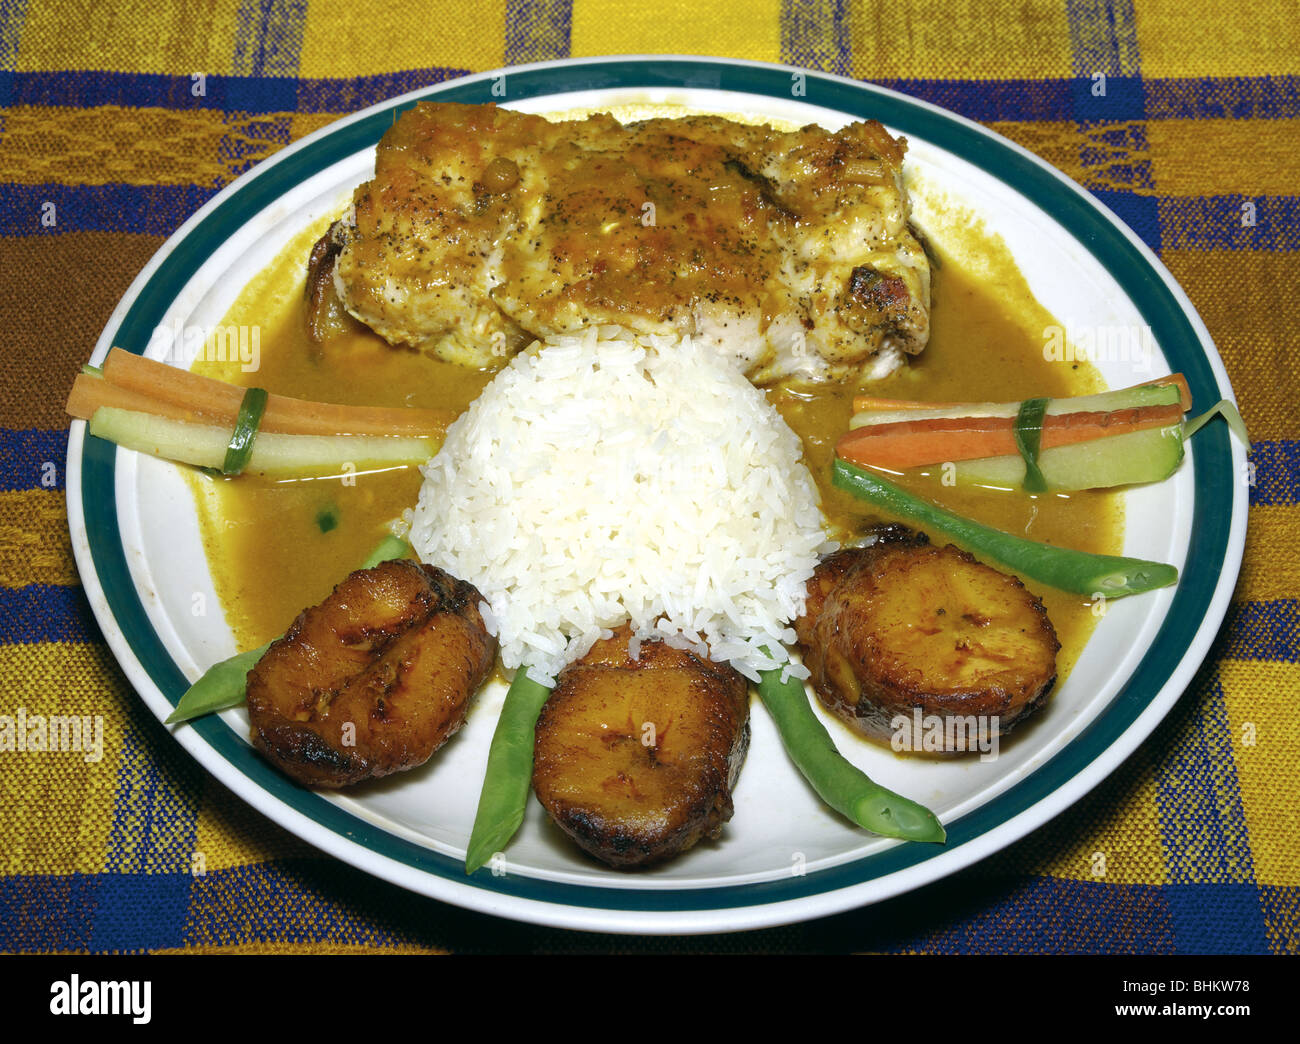 El Salvador. Salvadoran gastronomy. Fish with rice and banana. Stock Photo